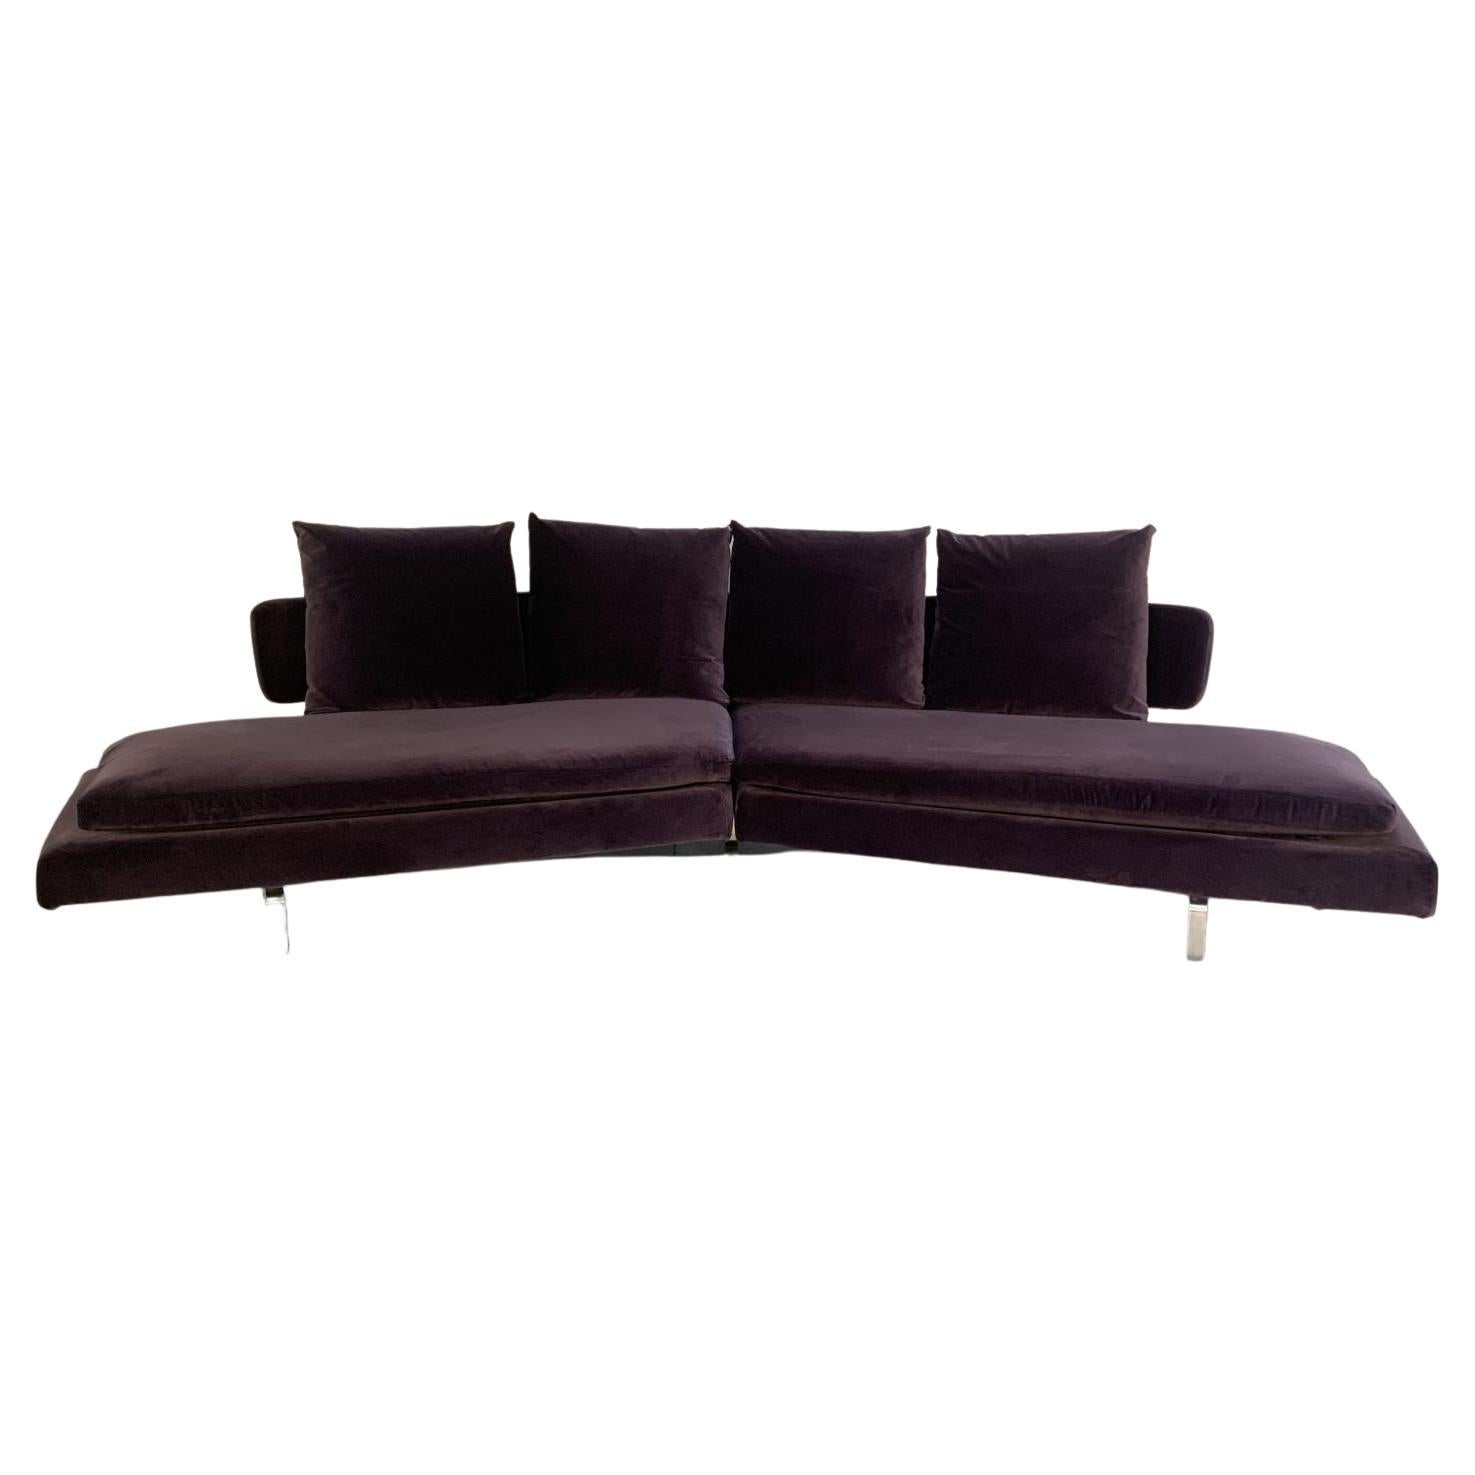 B&B Italia “Arne A252C_1” 4-Seat Curved Sofa in Purple Velvet For Sale